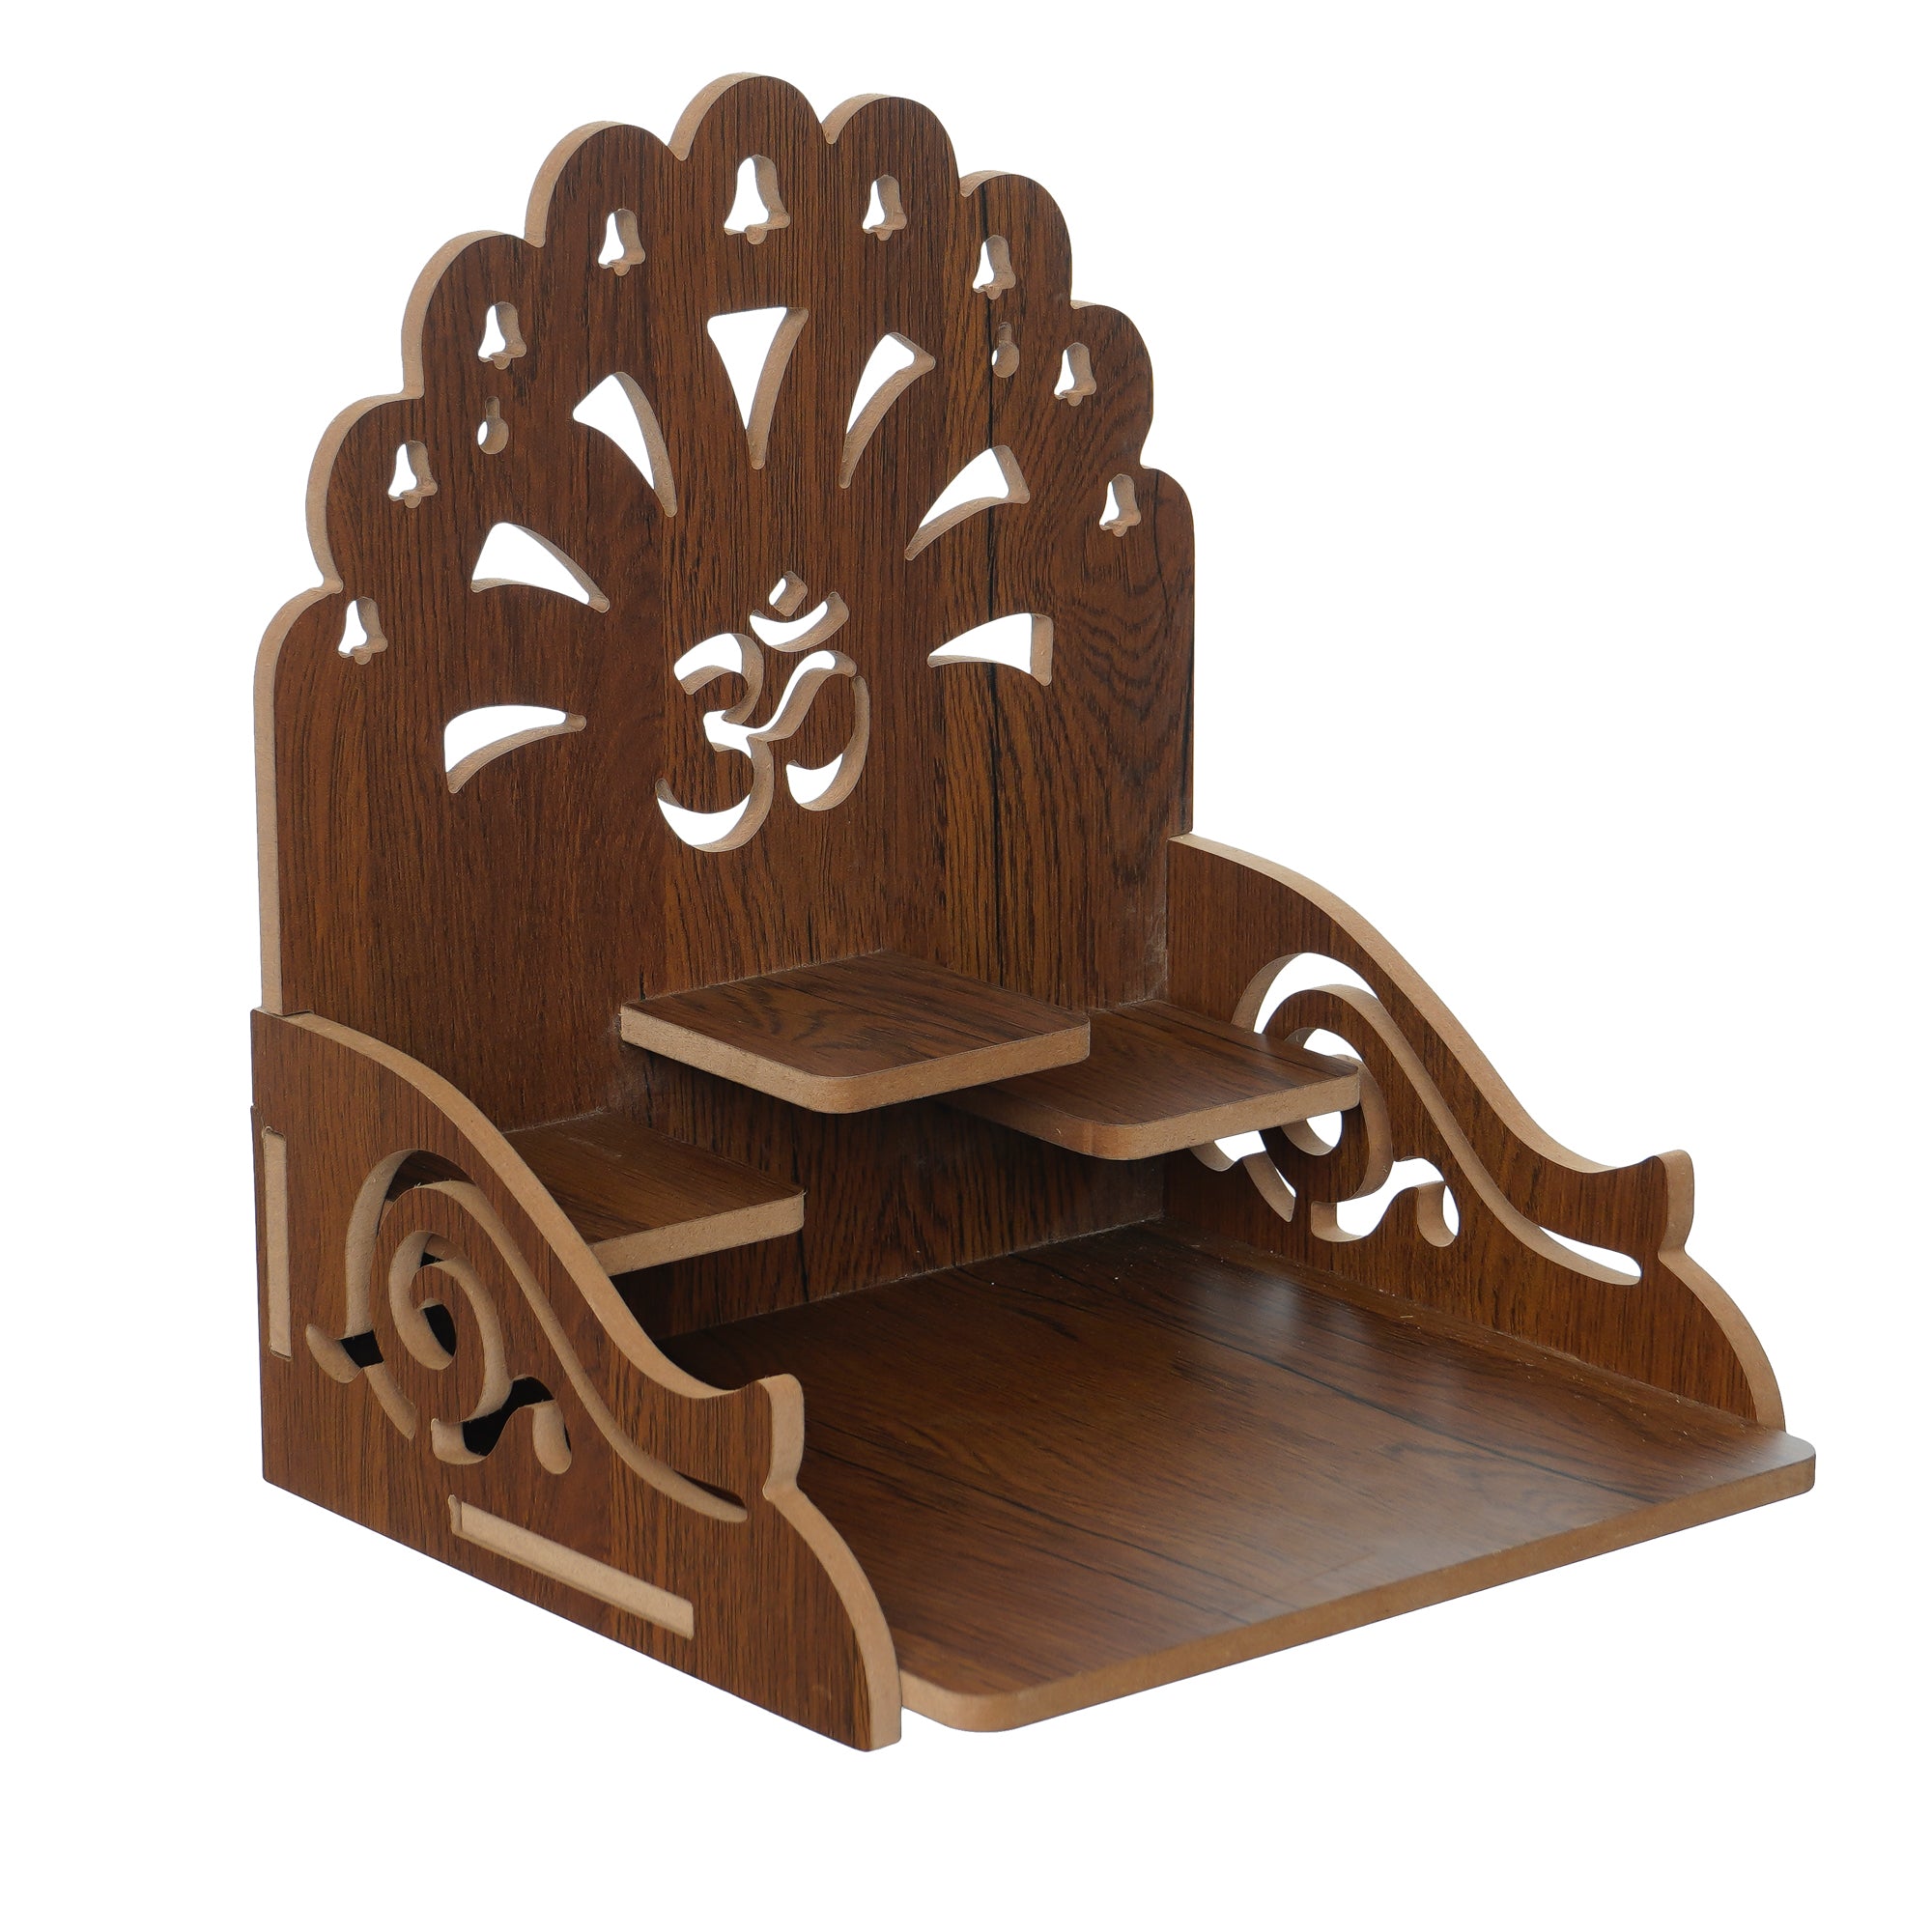 Om with Bells Design and 3 Shelfs Laminated Wood Pooja Temple/Mandir 2